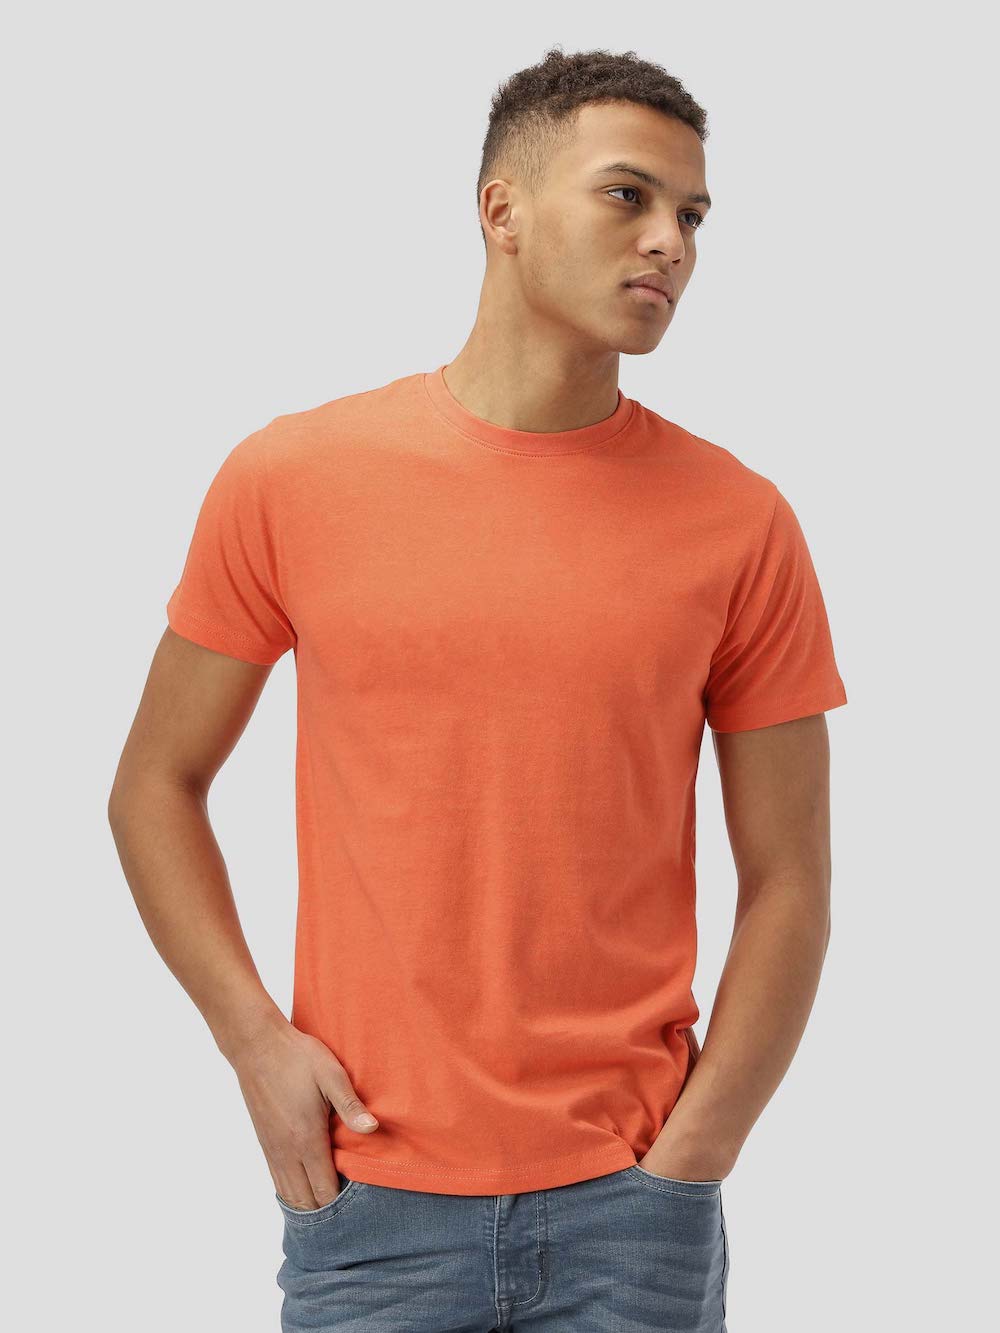 Roxy T-Shirt - Orange Flame Mix